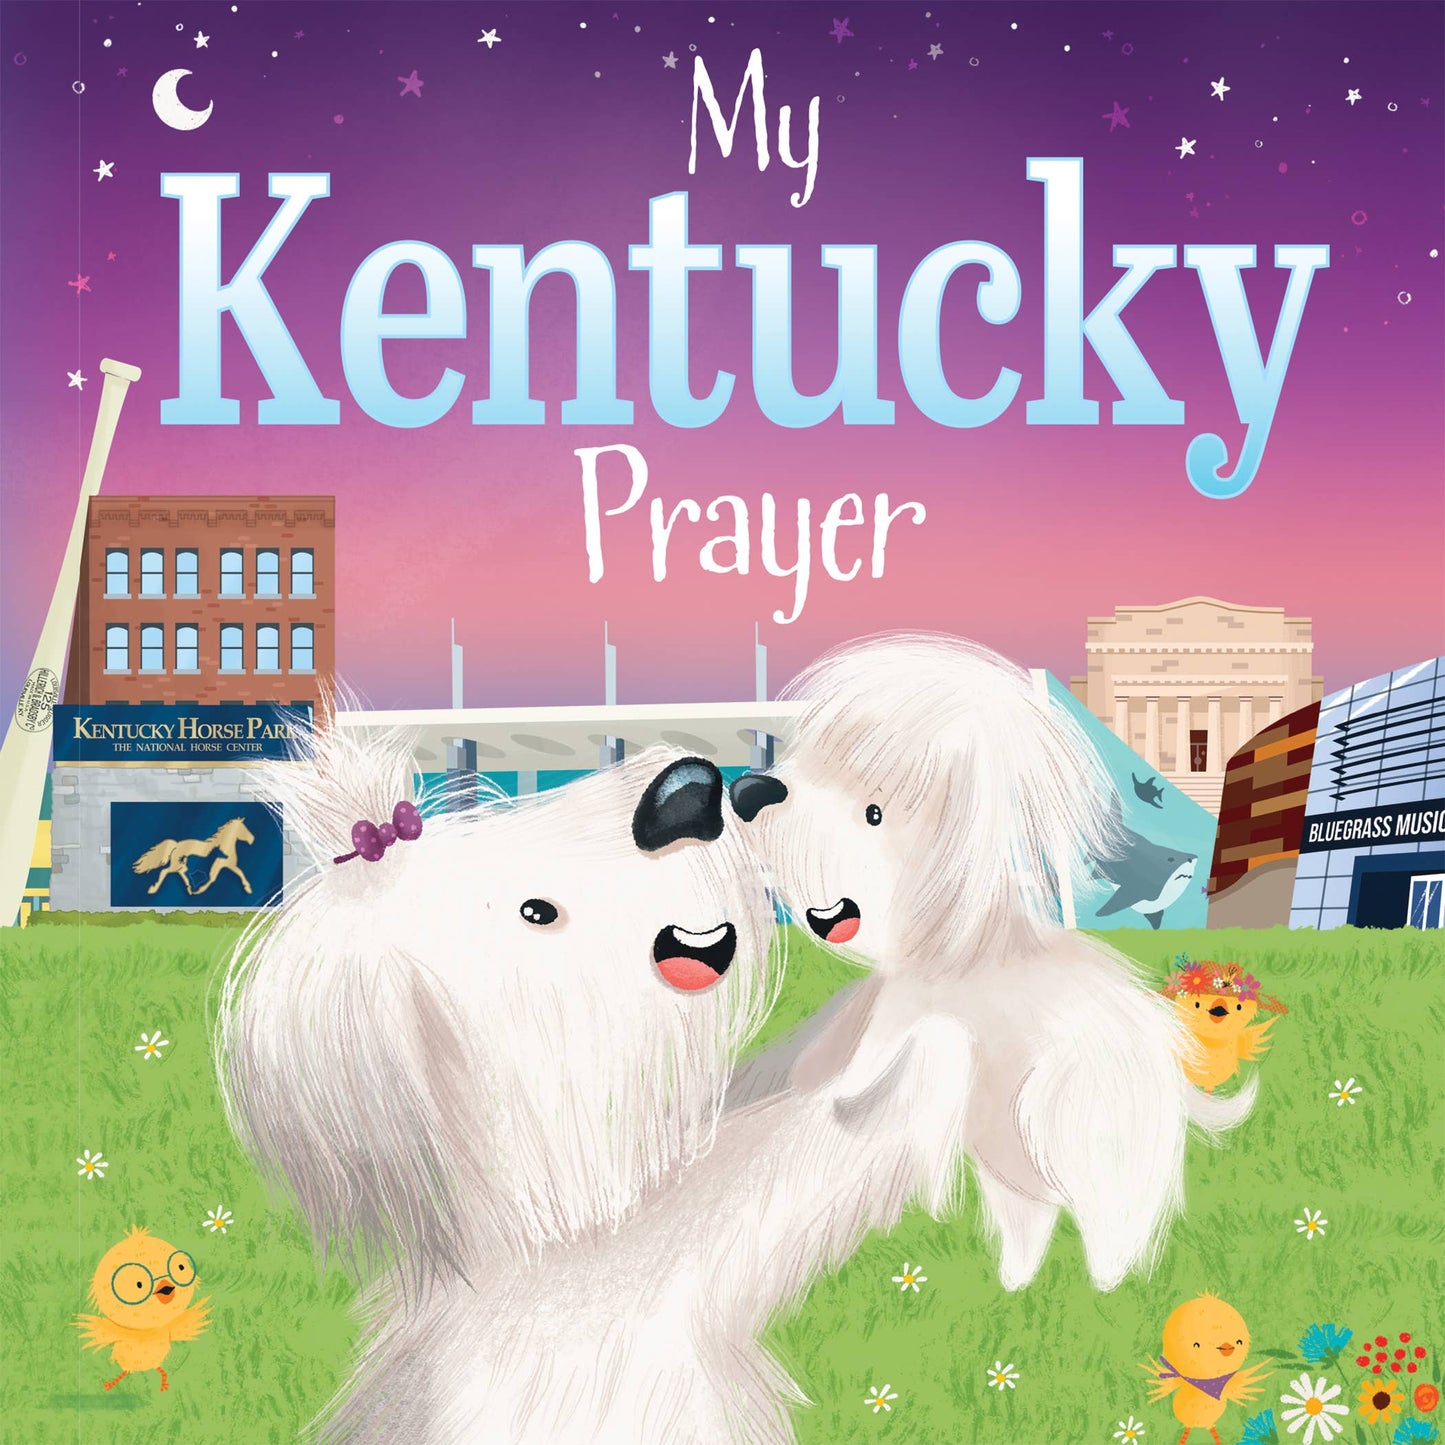 My Kentucky Prayer Book